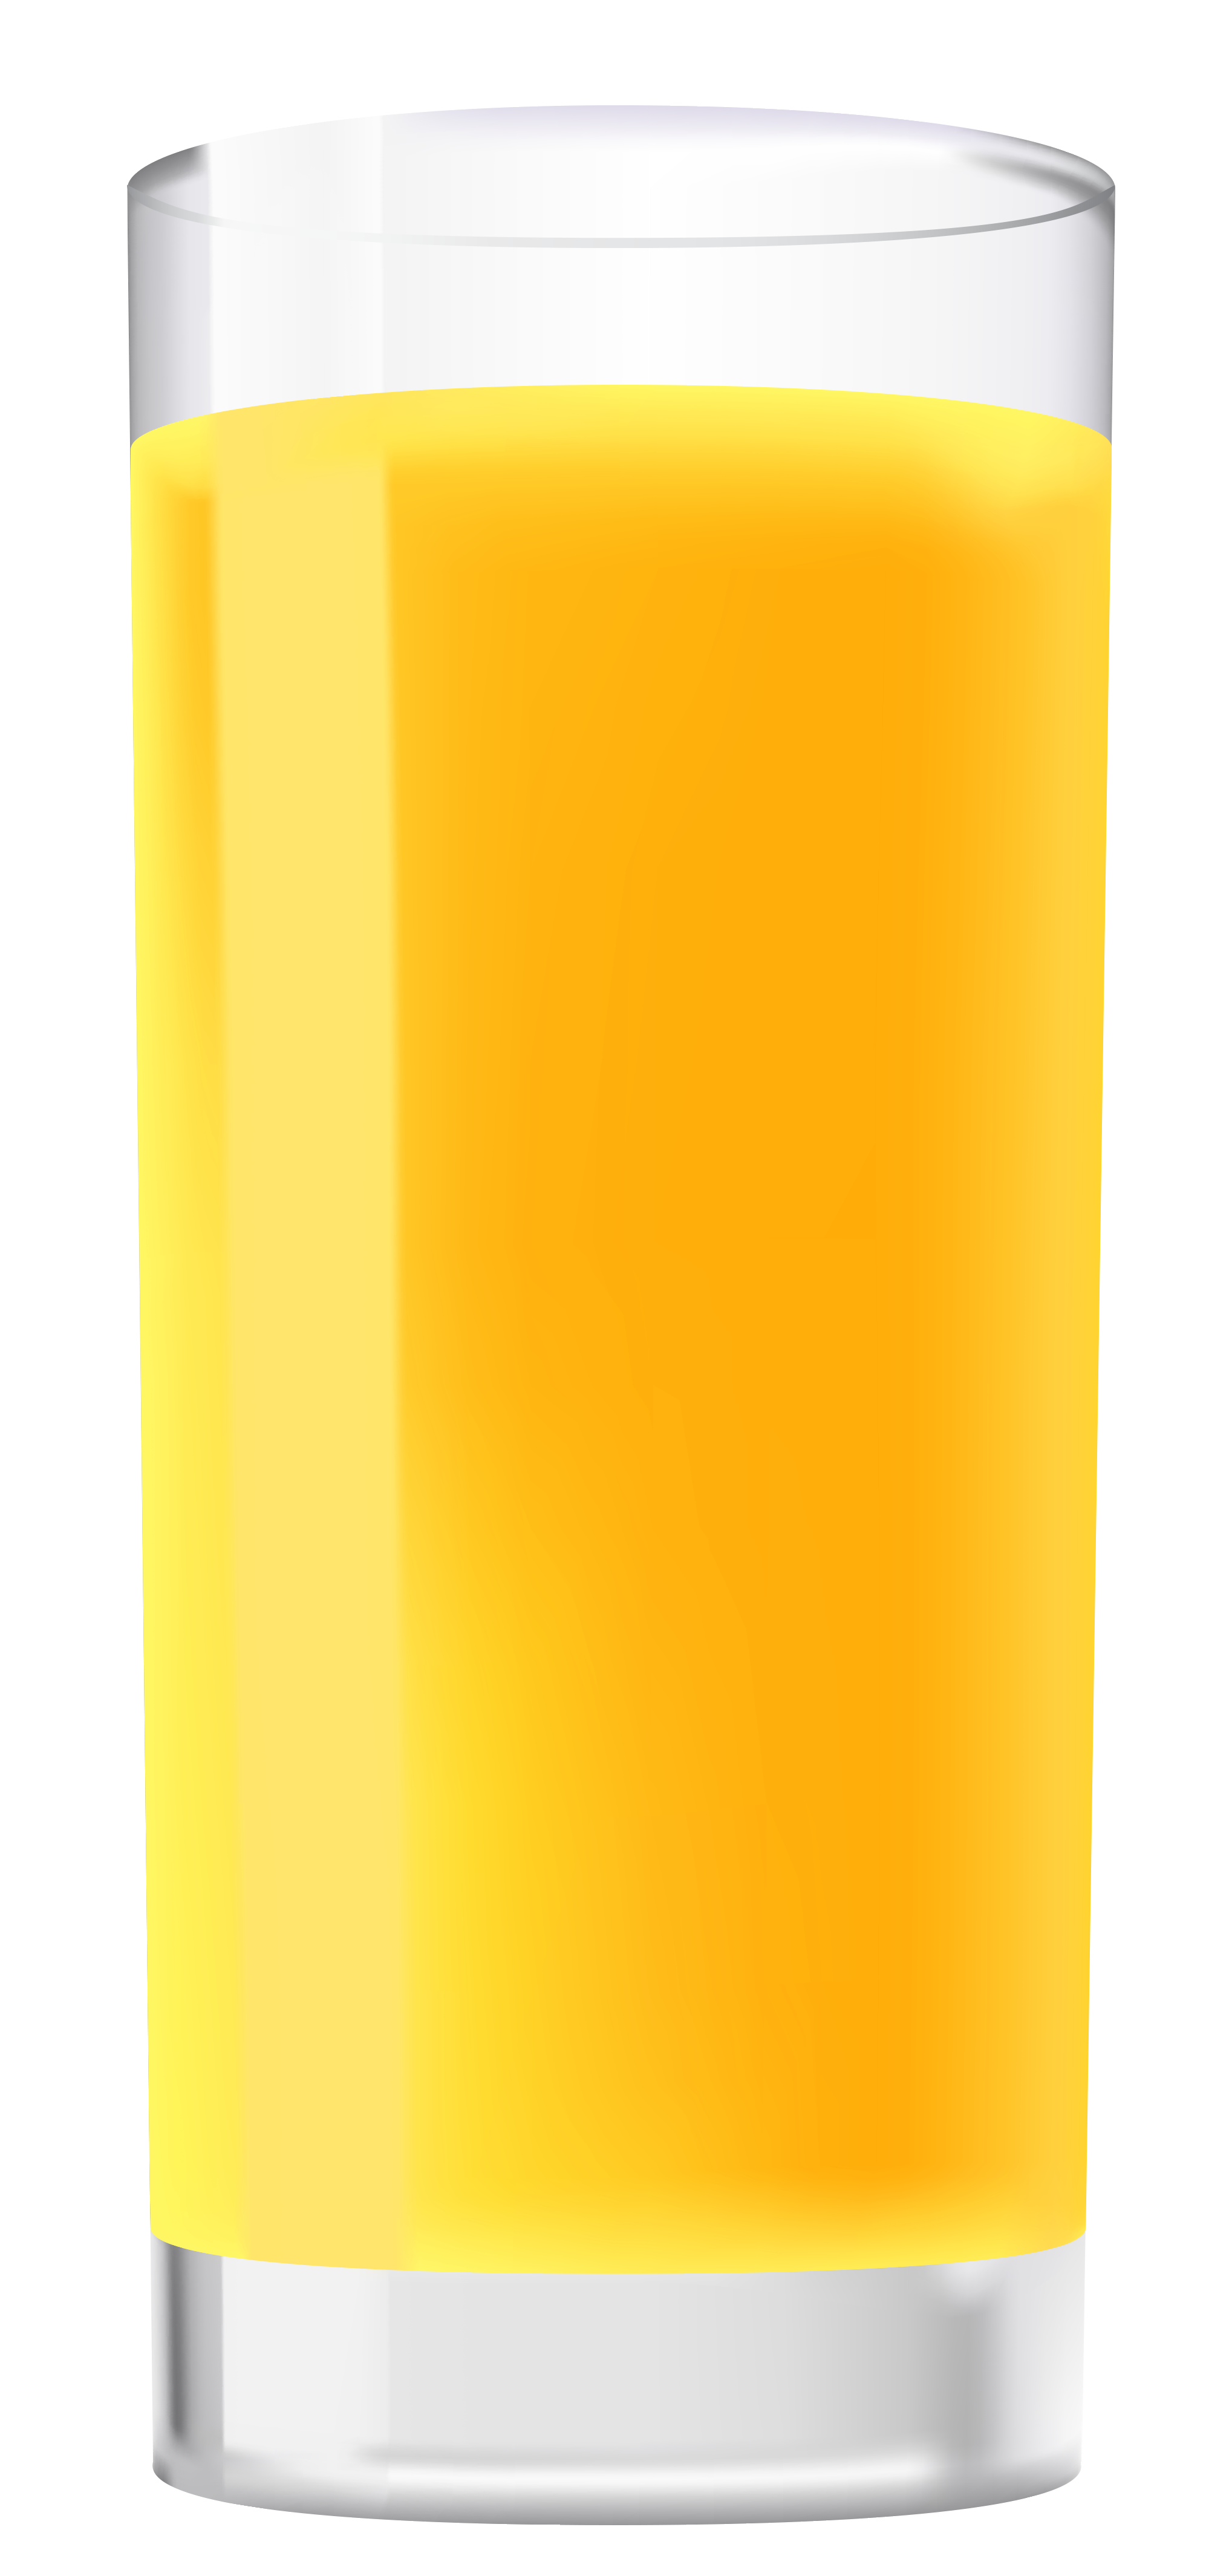 free clipart glass of orange juice - photo #31